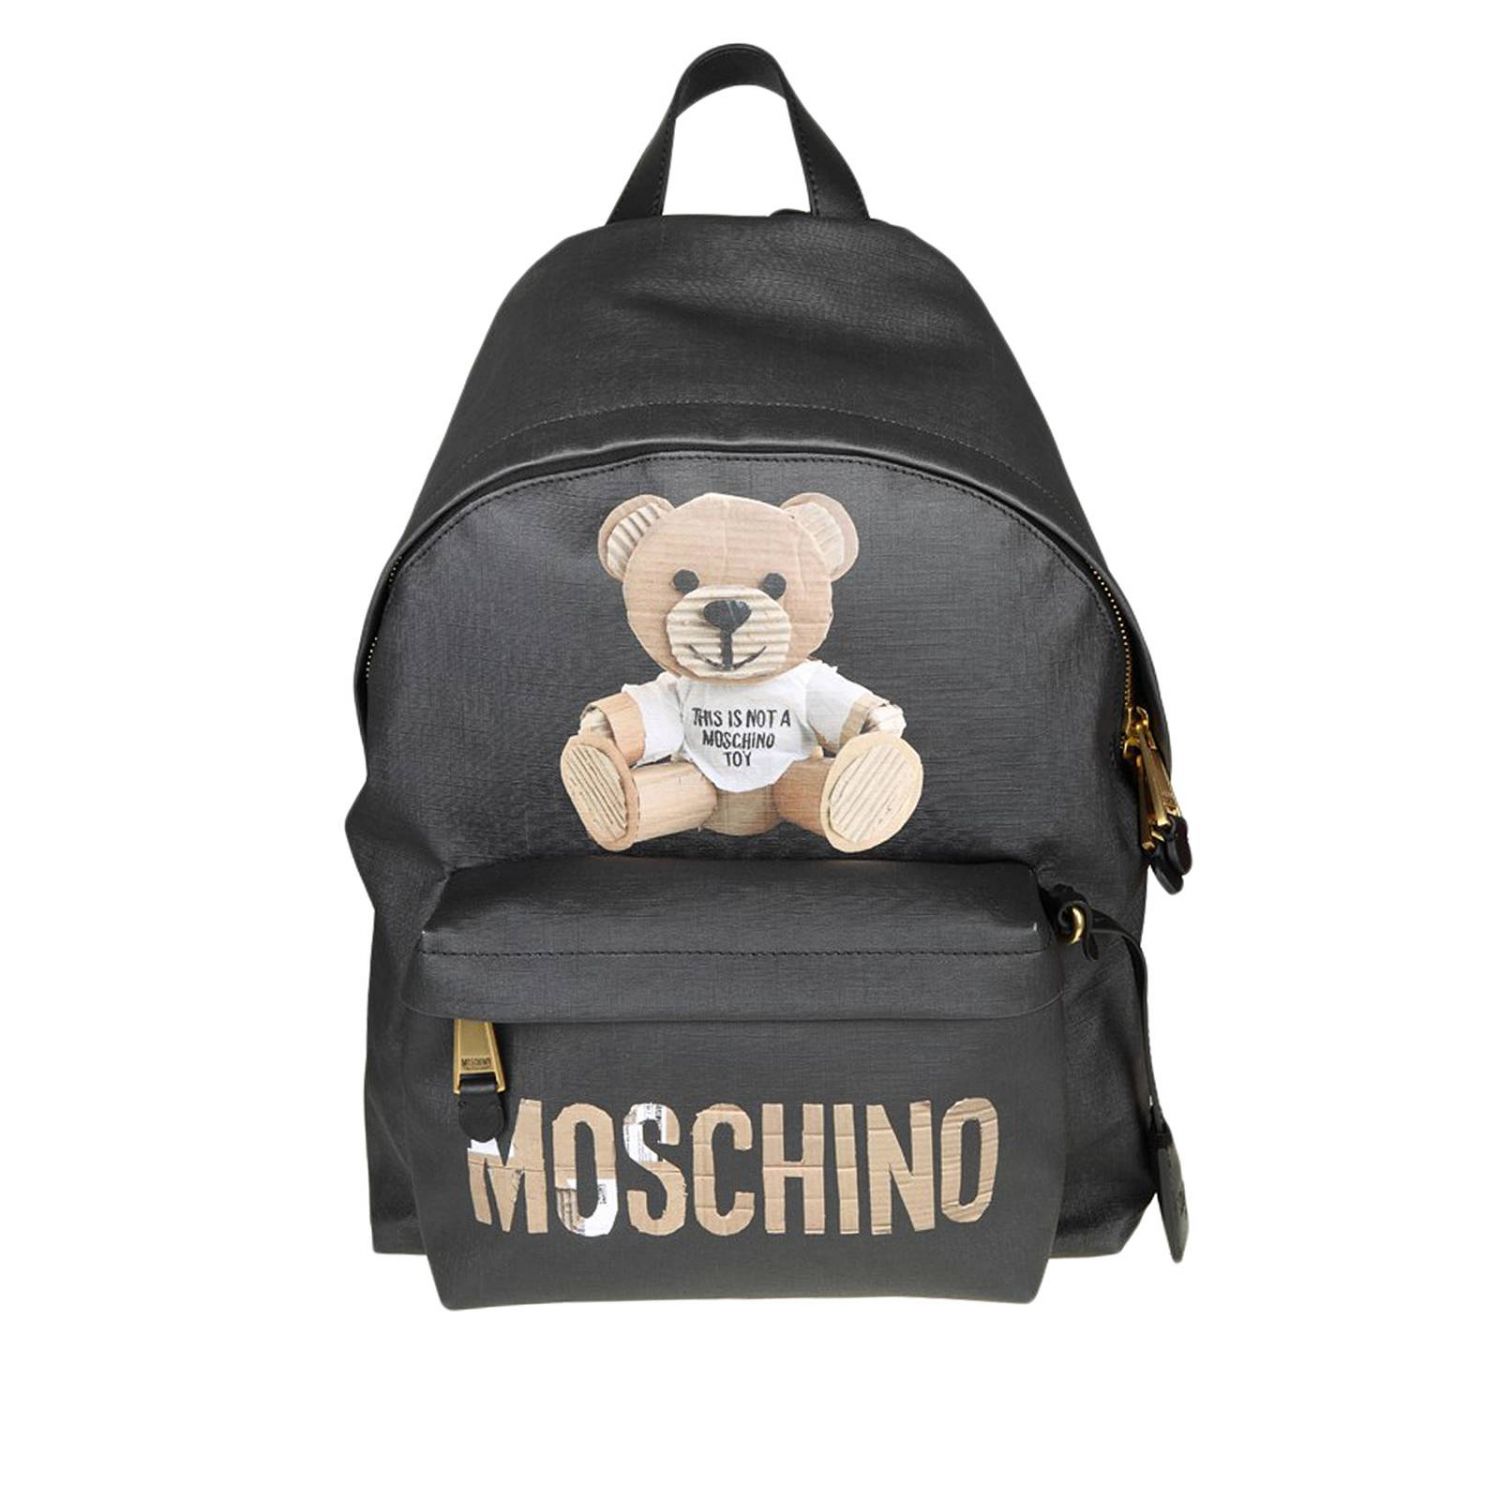 moschino backpack mens